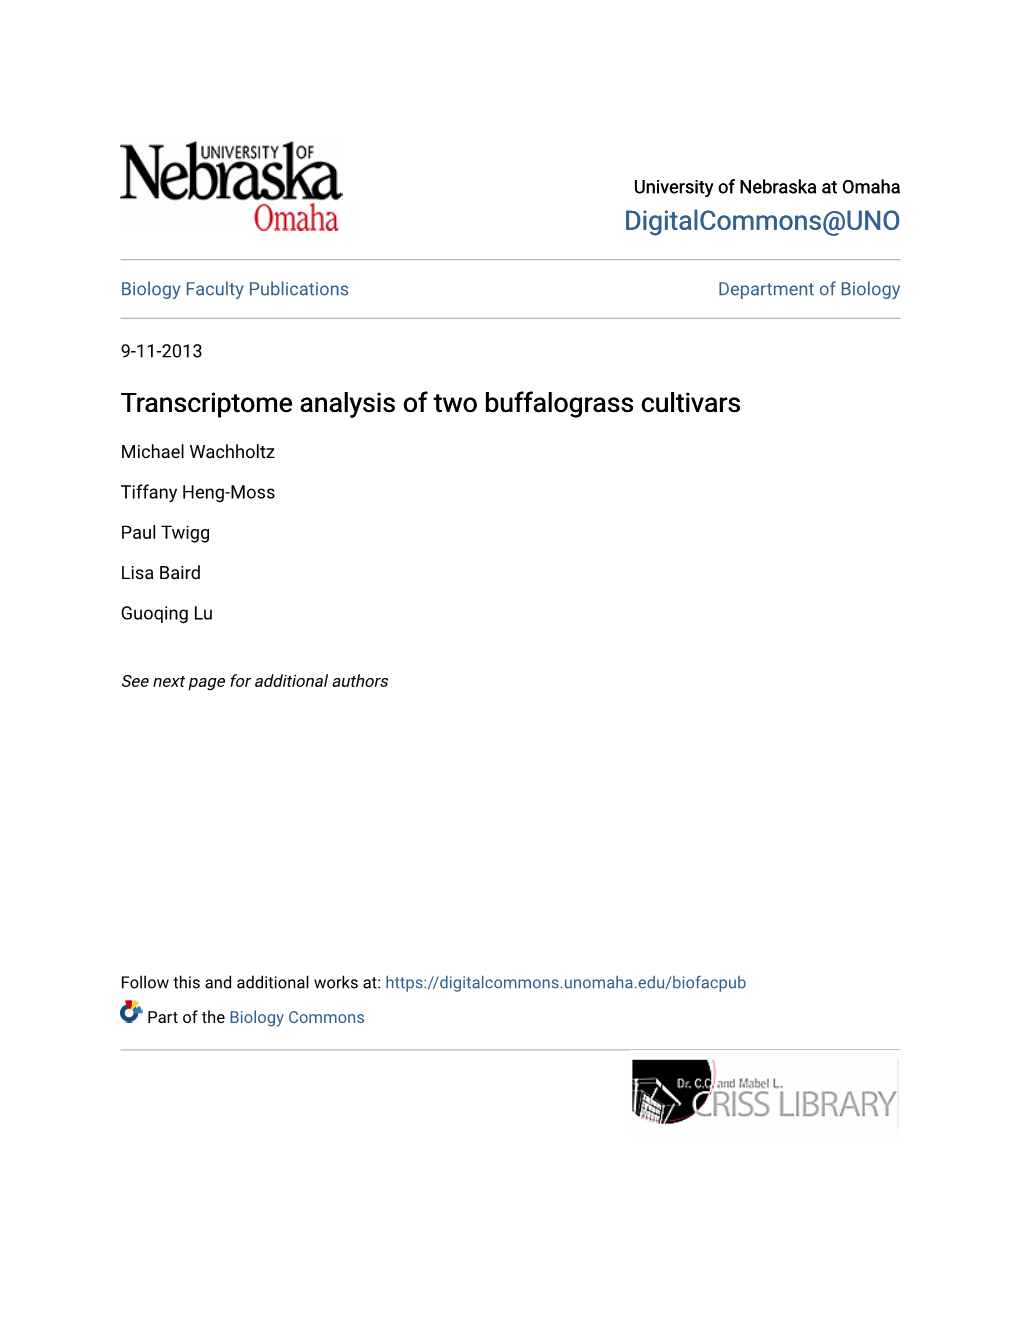 Transcriptome Analysis of Two Buffalograss Cultivars